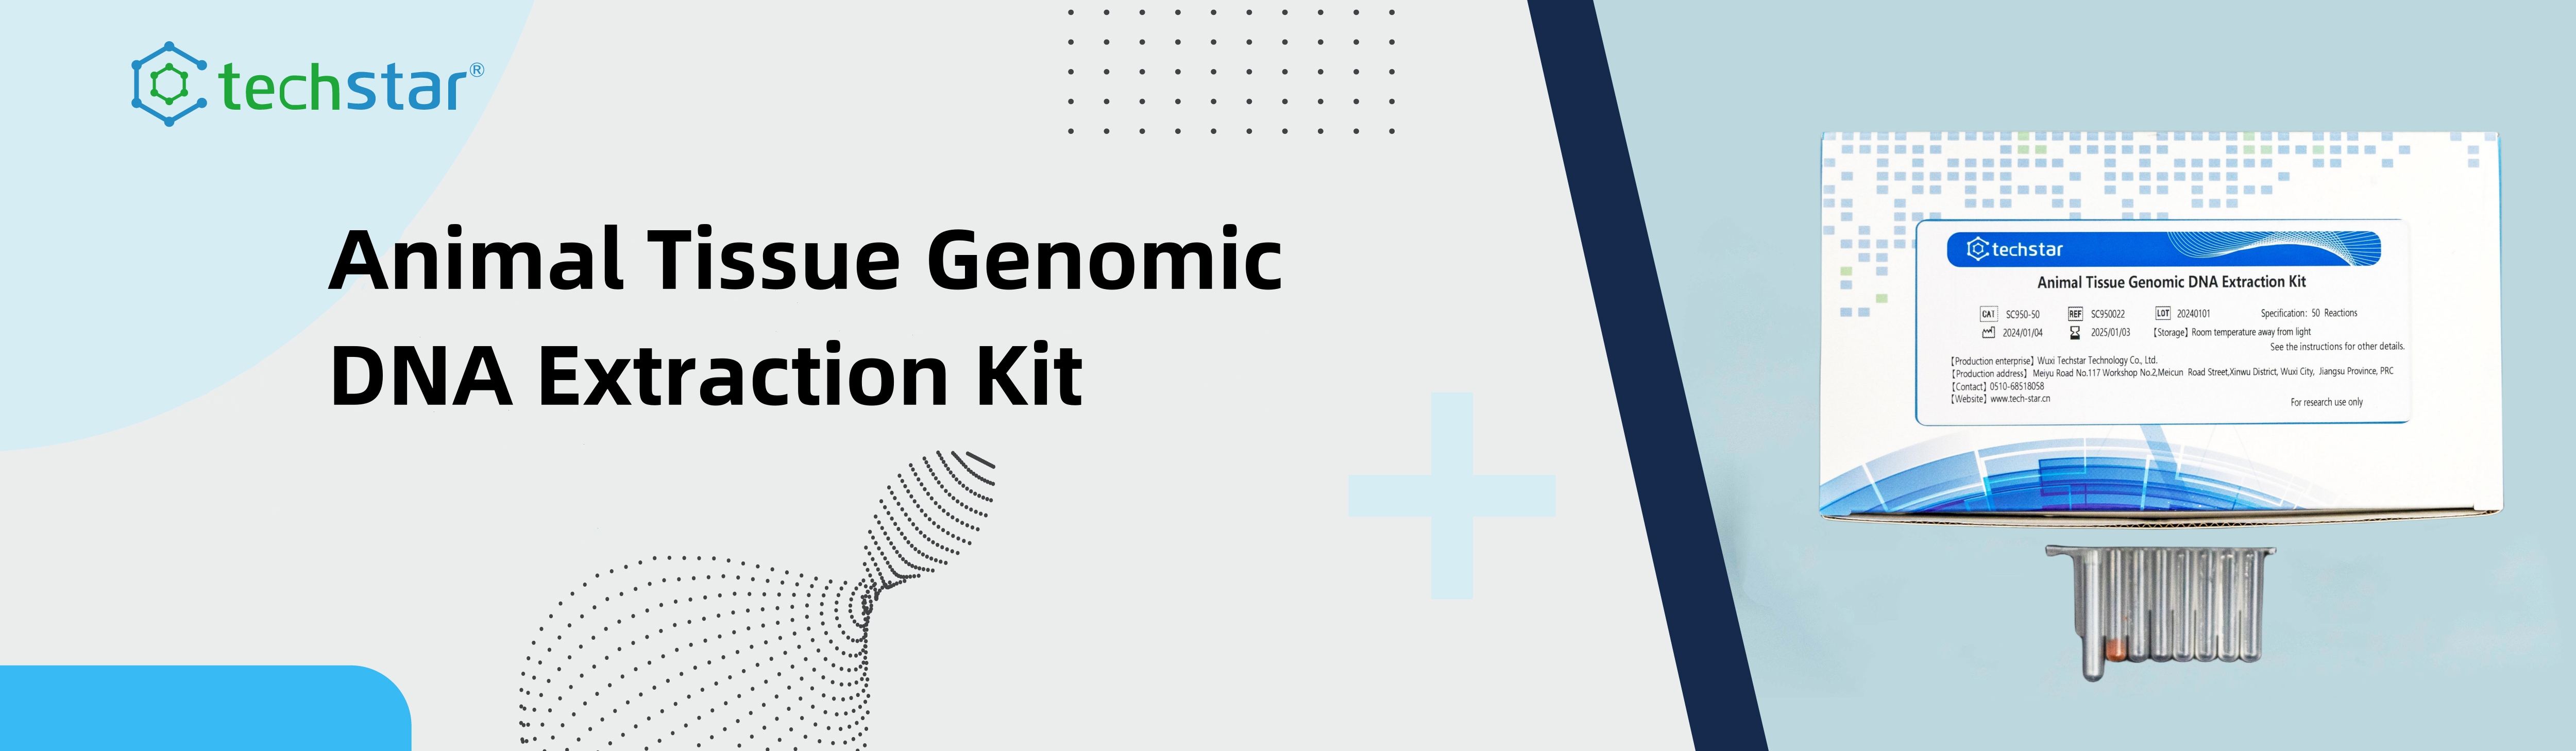 Animal Tissue Genomic DNA Extraction Kit